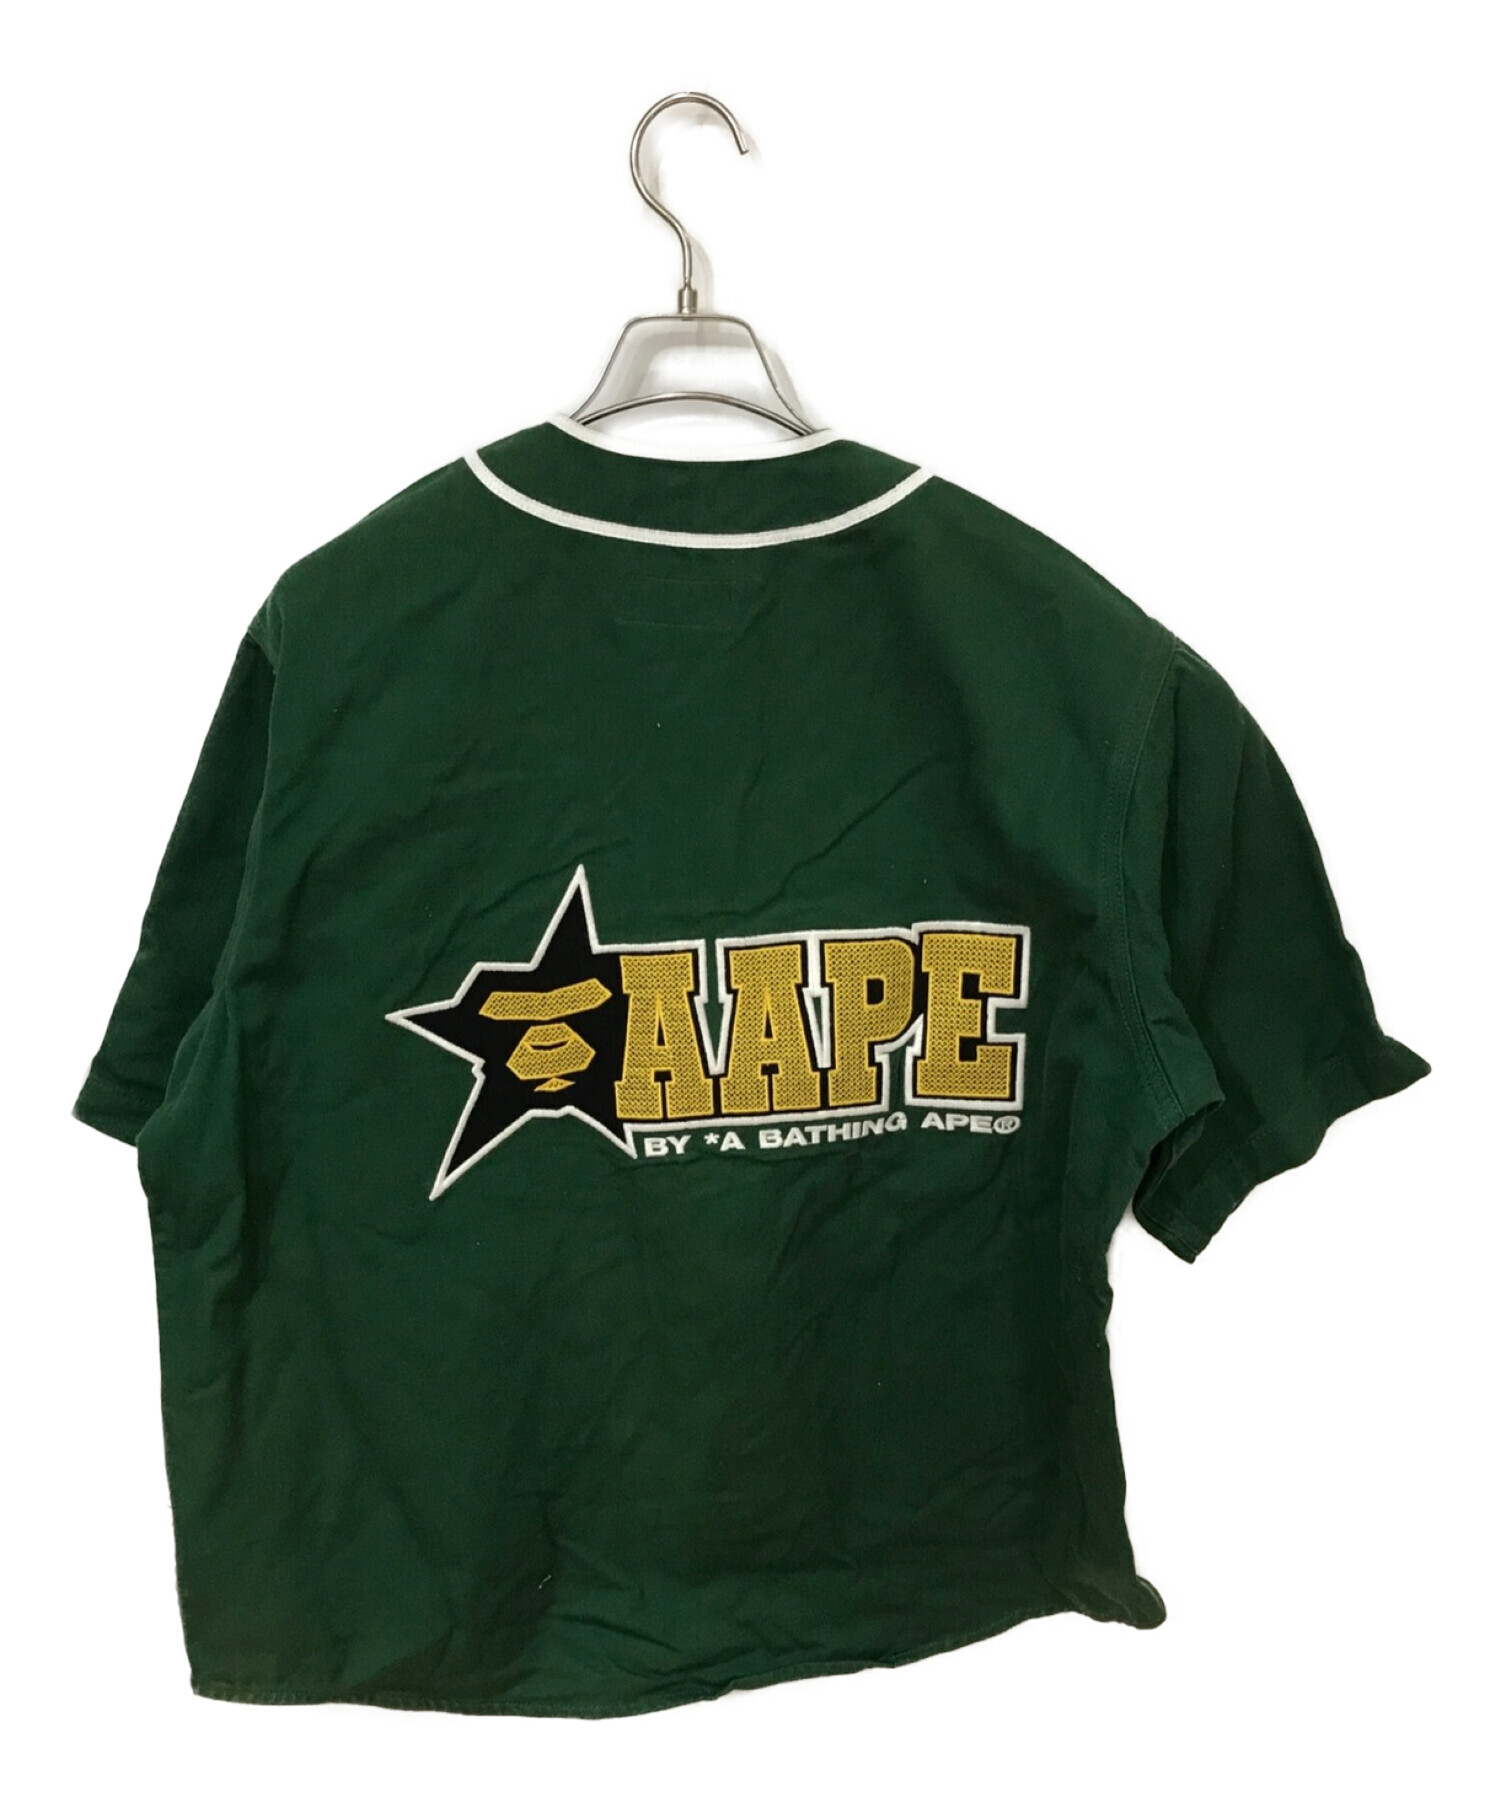 Aape BY A BATHING APE (エーエイプ バイ アベイシングエイプ) ベースボールシャツ グリーン サイズ:M.